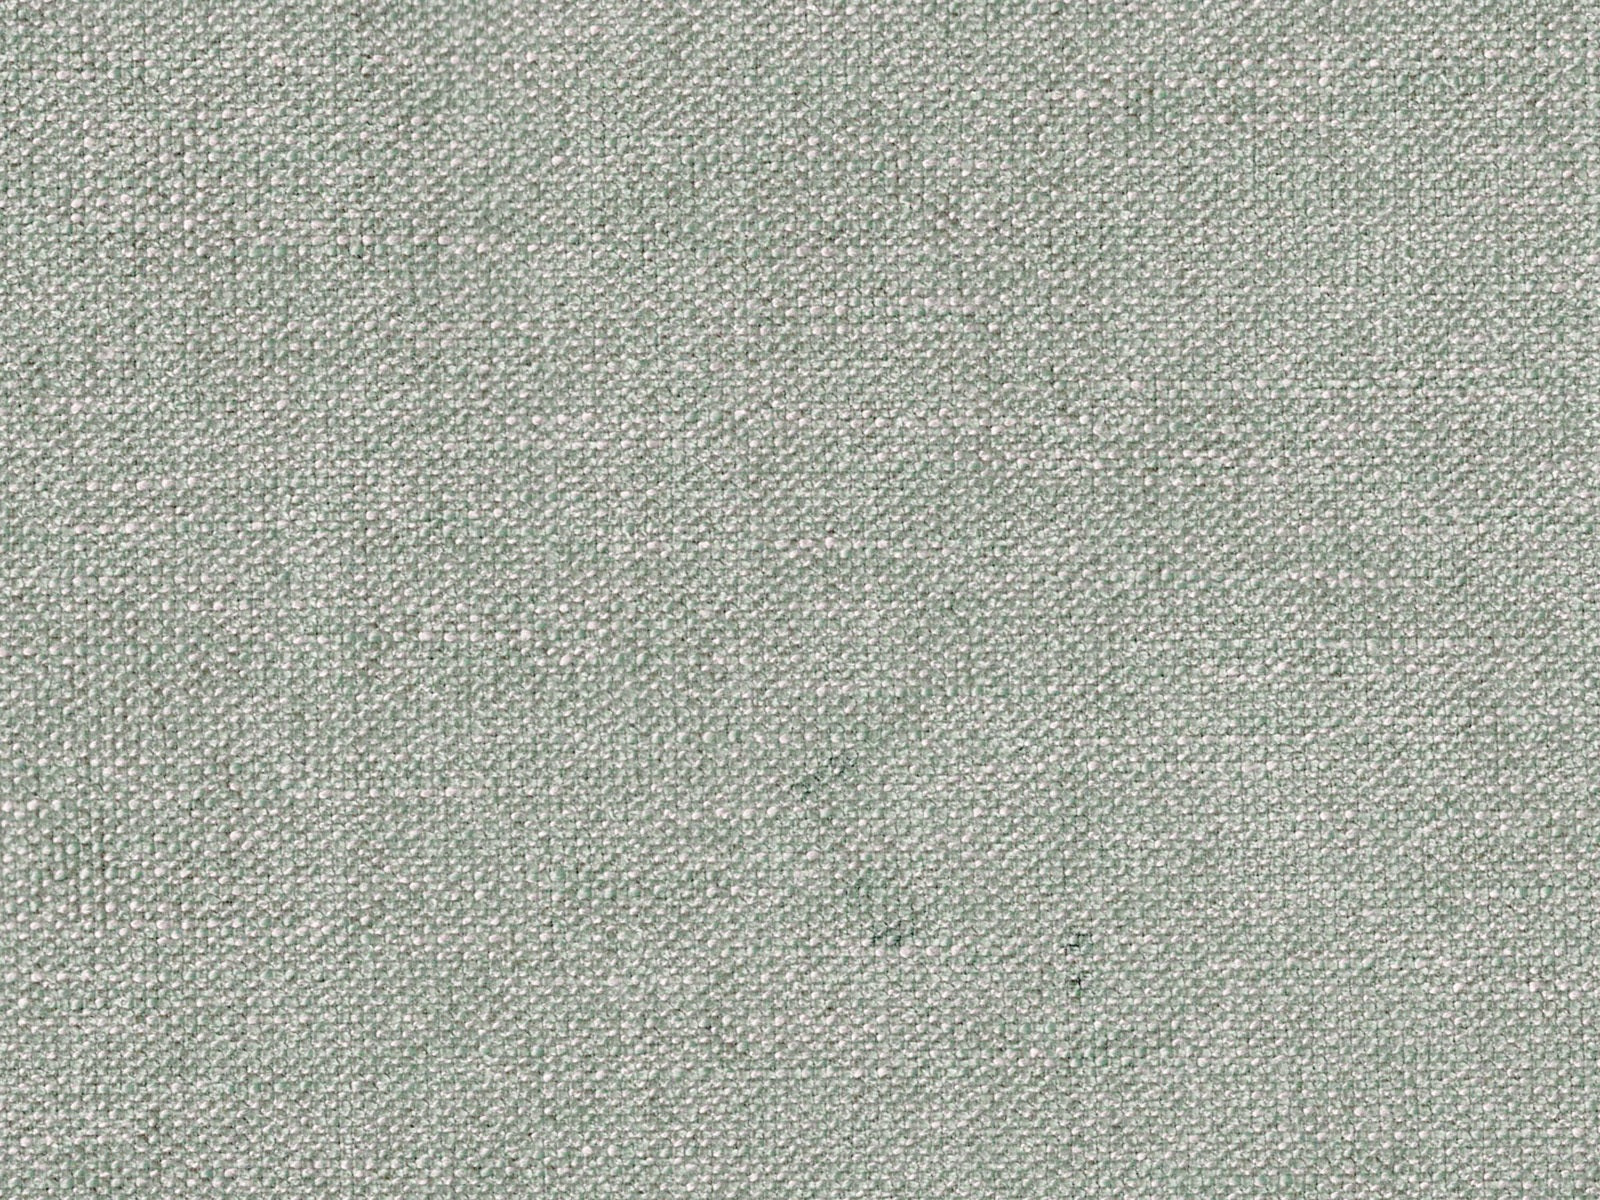 Finesse Fabric Samples - Rydan Interiors